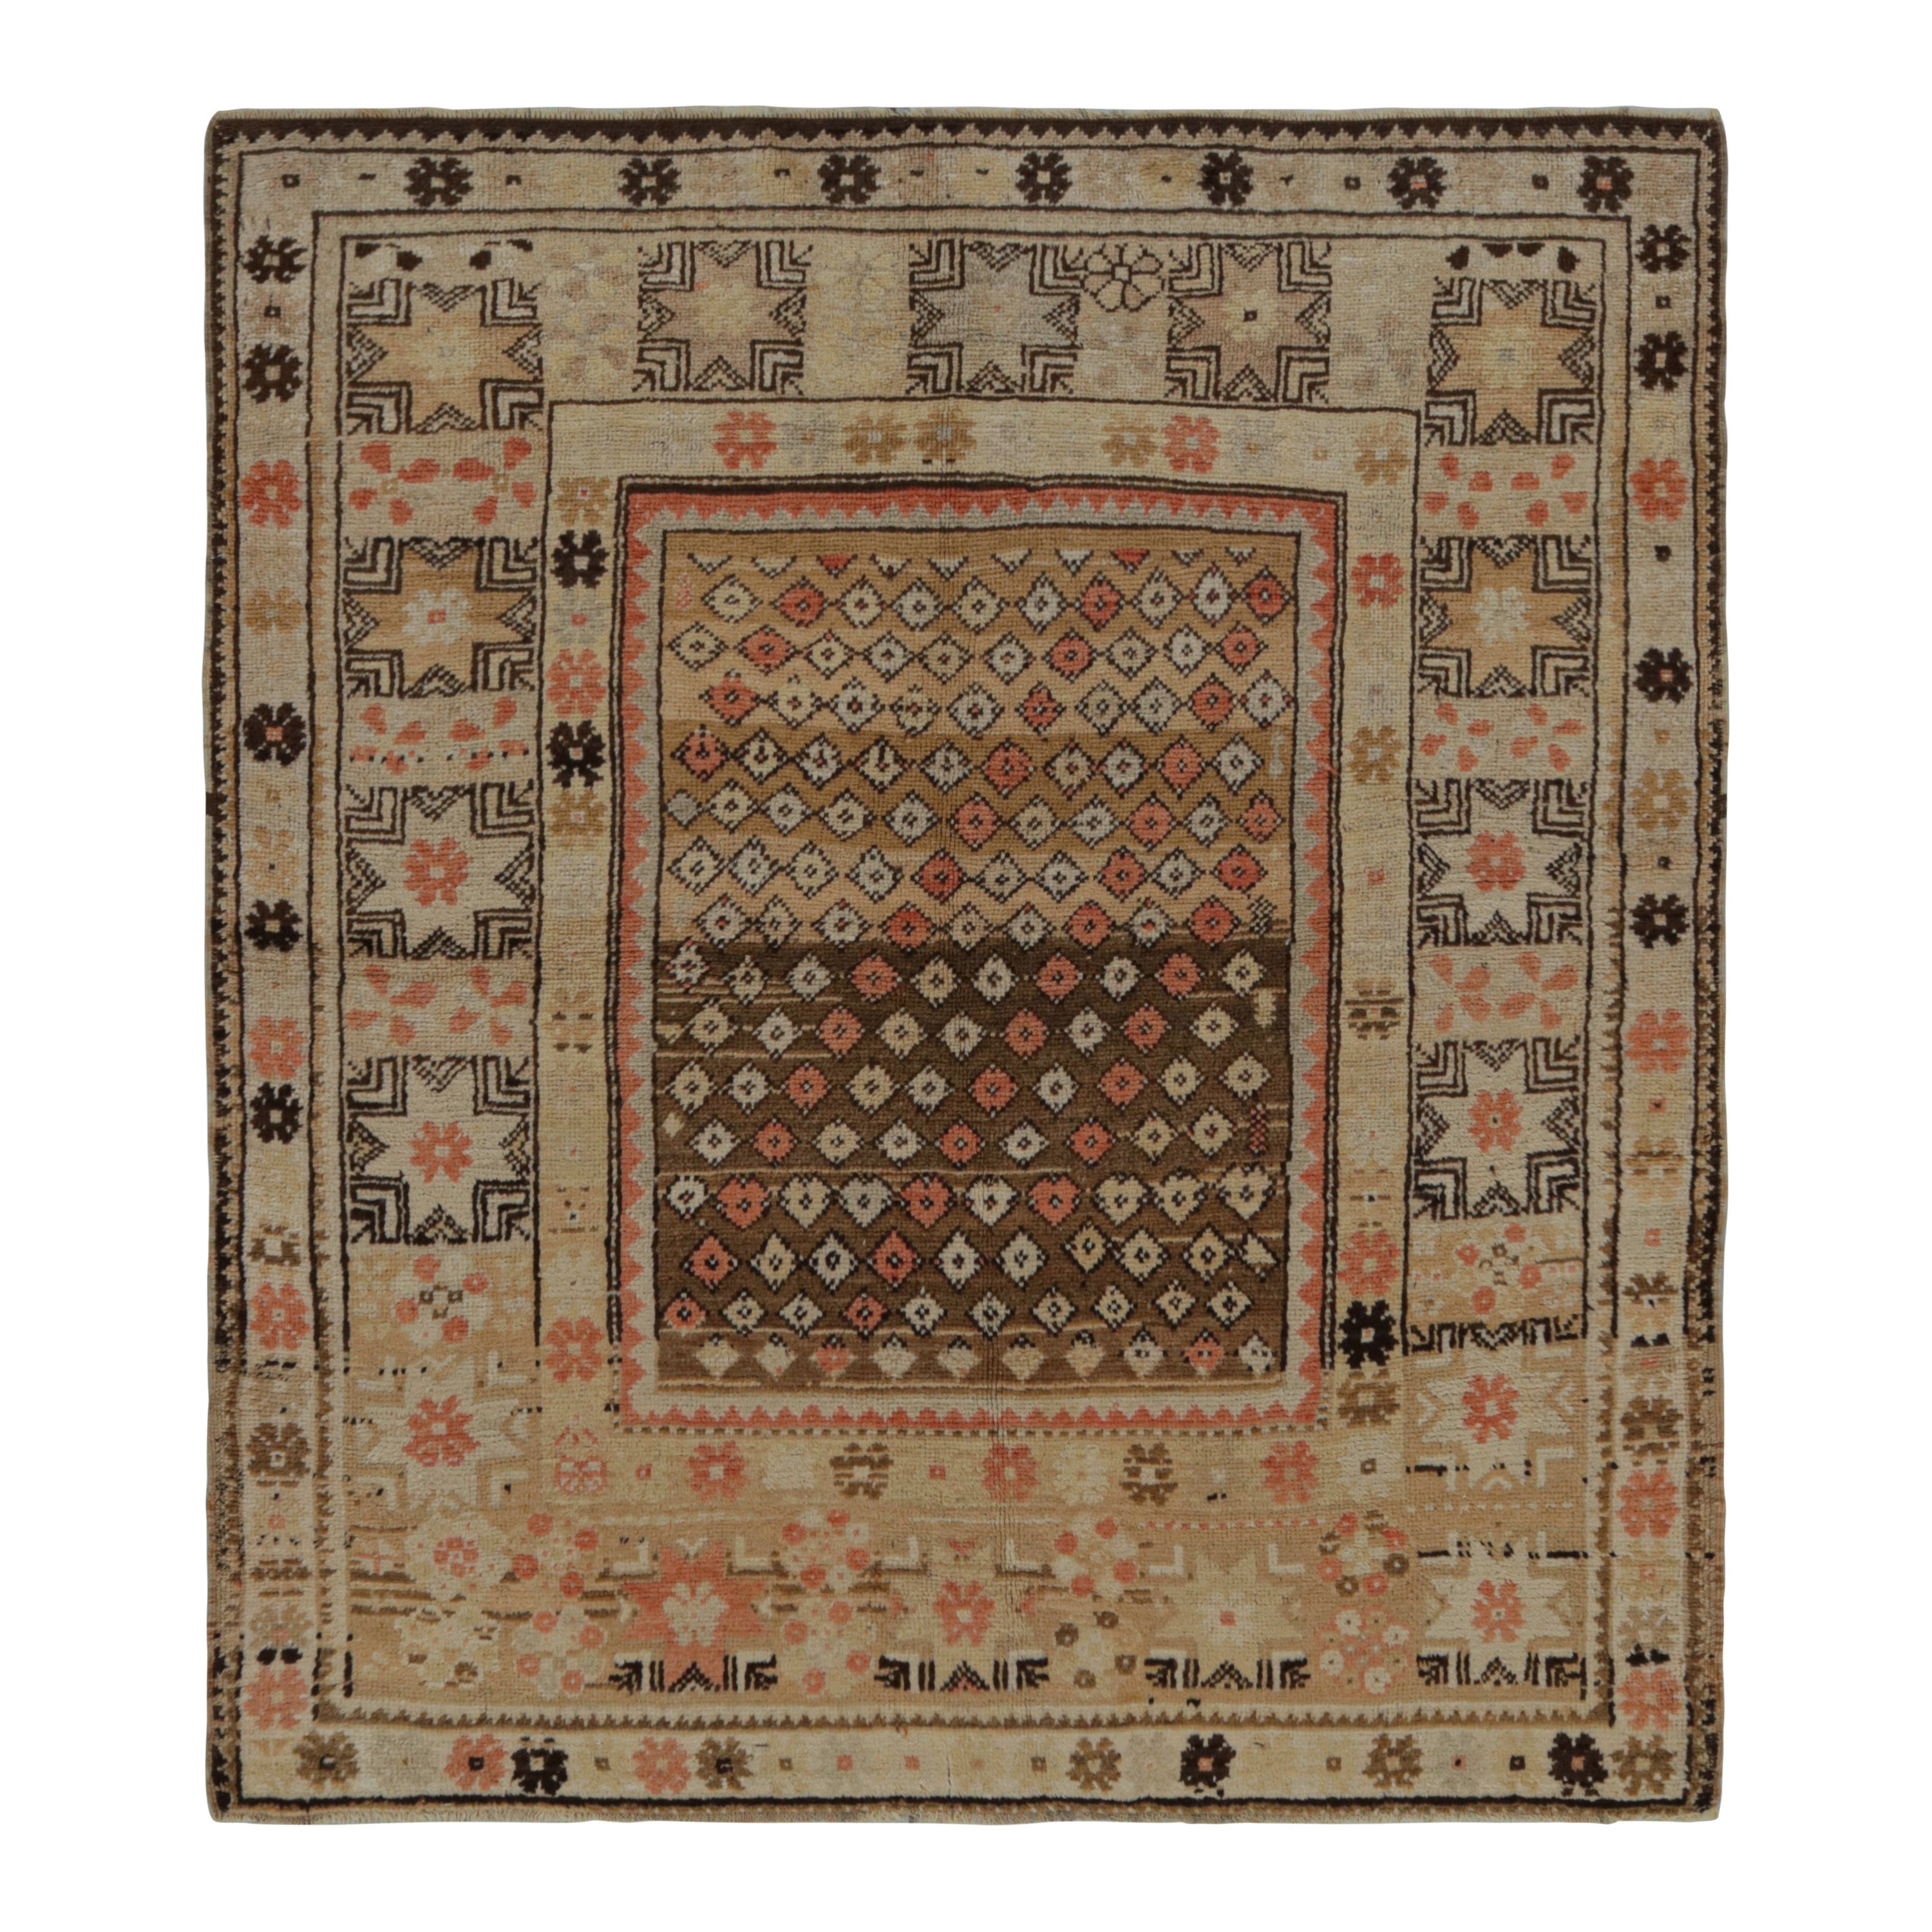 Antique Oushak rug in Beige-Brown Tribal Patterns by Rug & Kilim